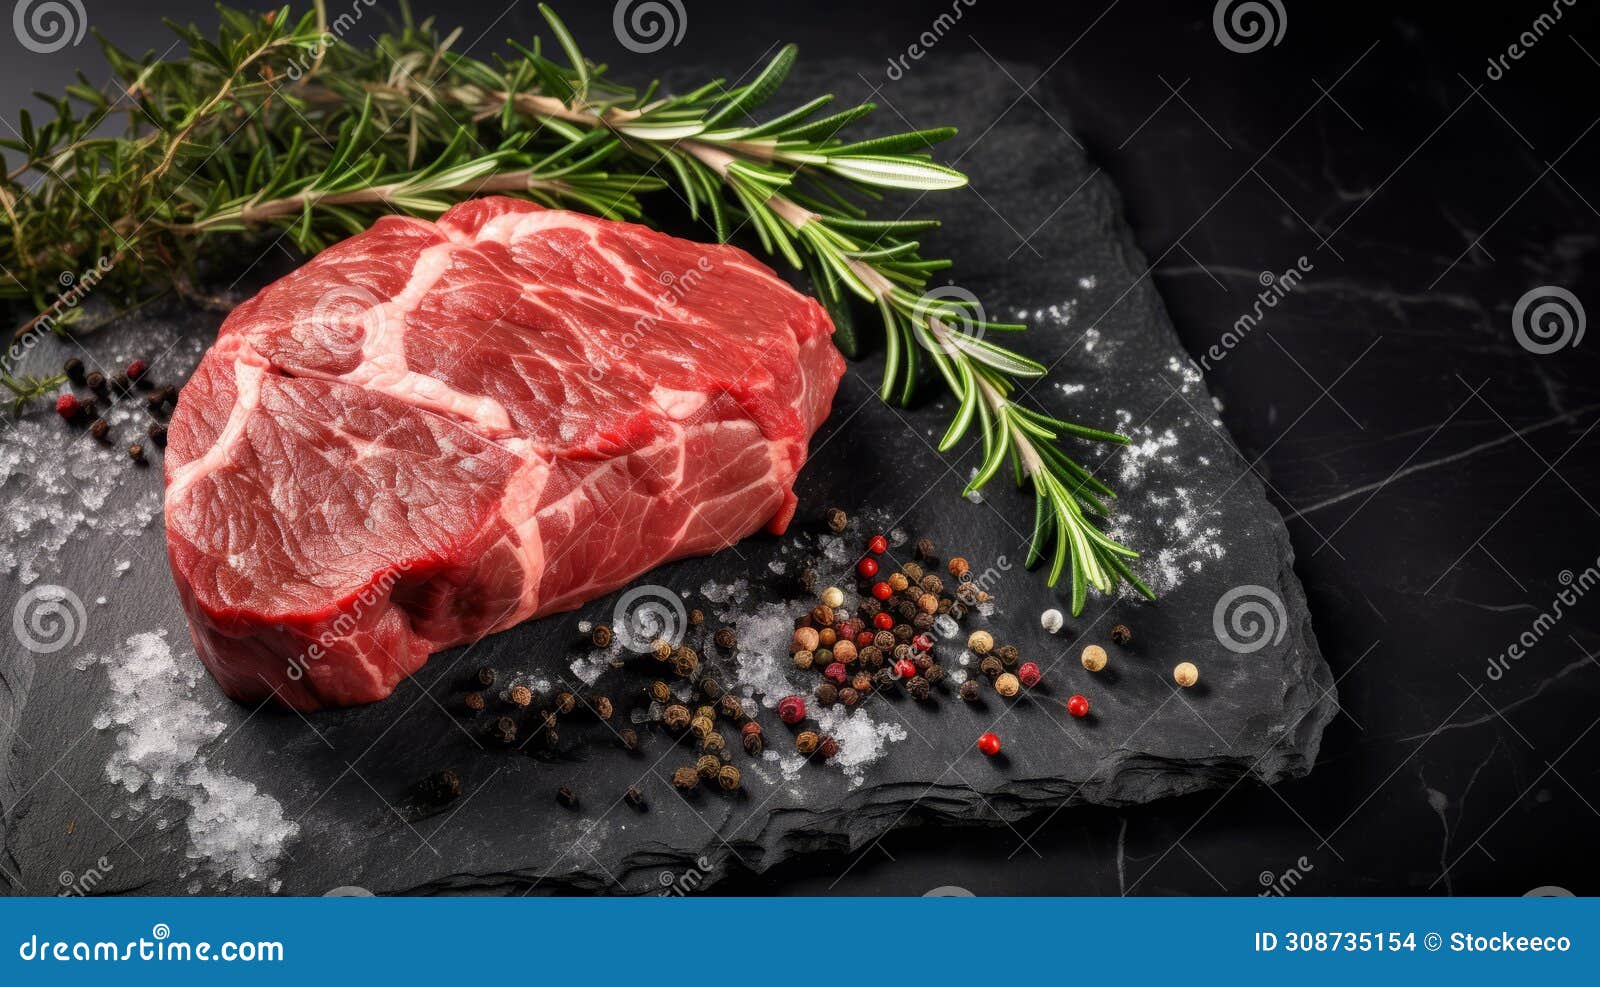 savory beef steak with spices on dark stone background